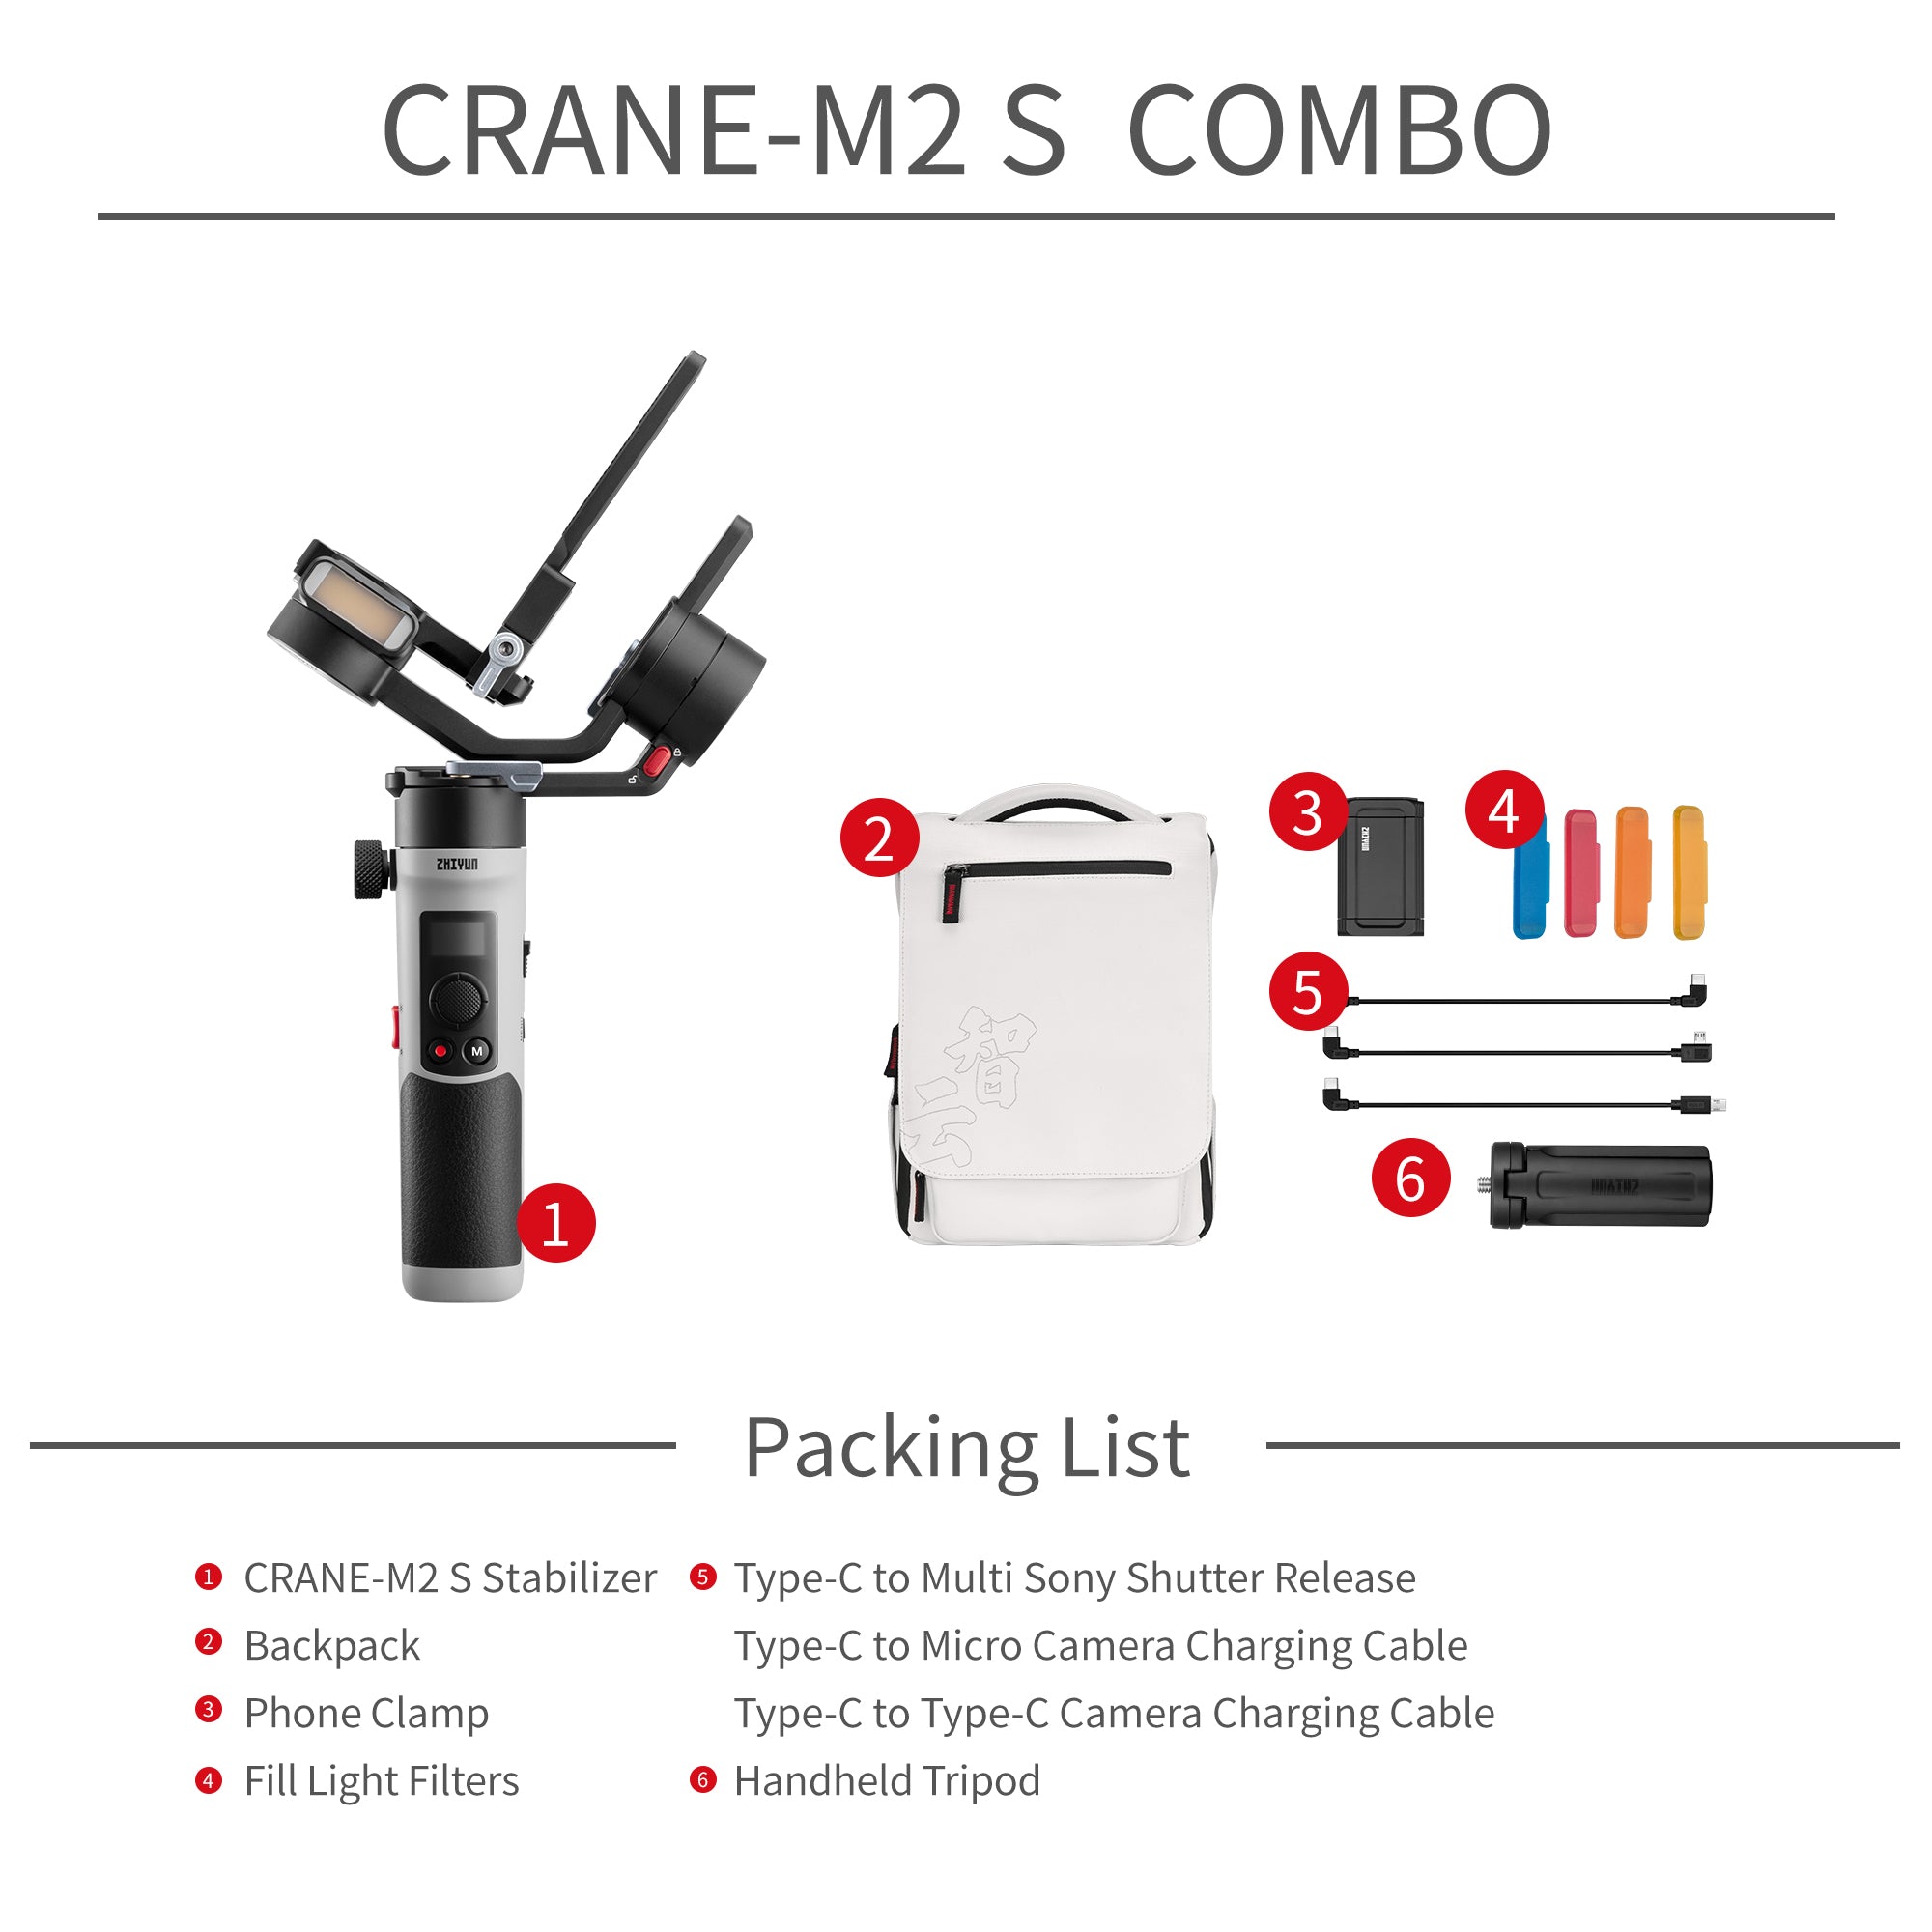 ZHIYUN Crane M2S Combo Kit Package List